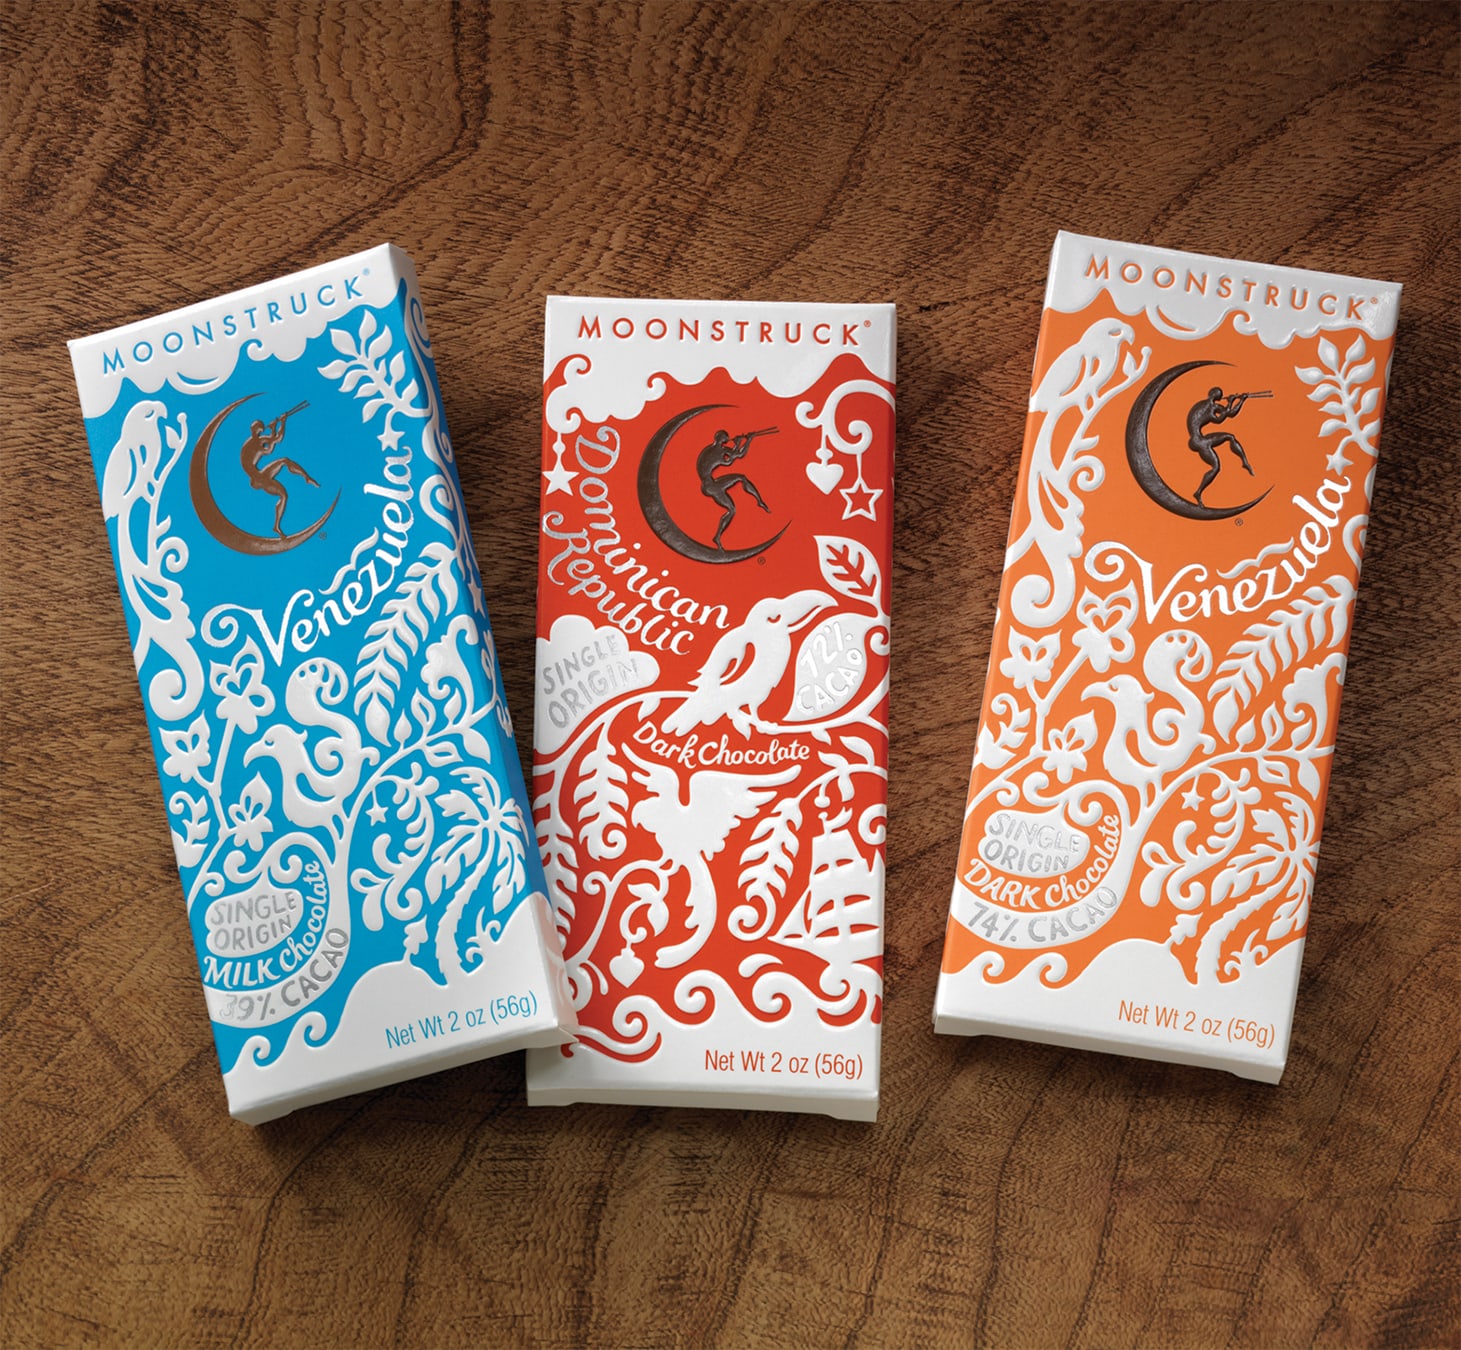 Moonstruck Chocolate single origin bar packaging design